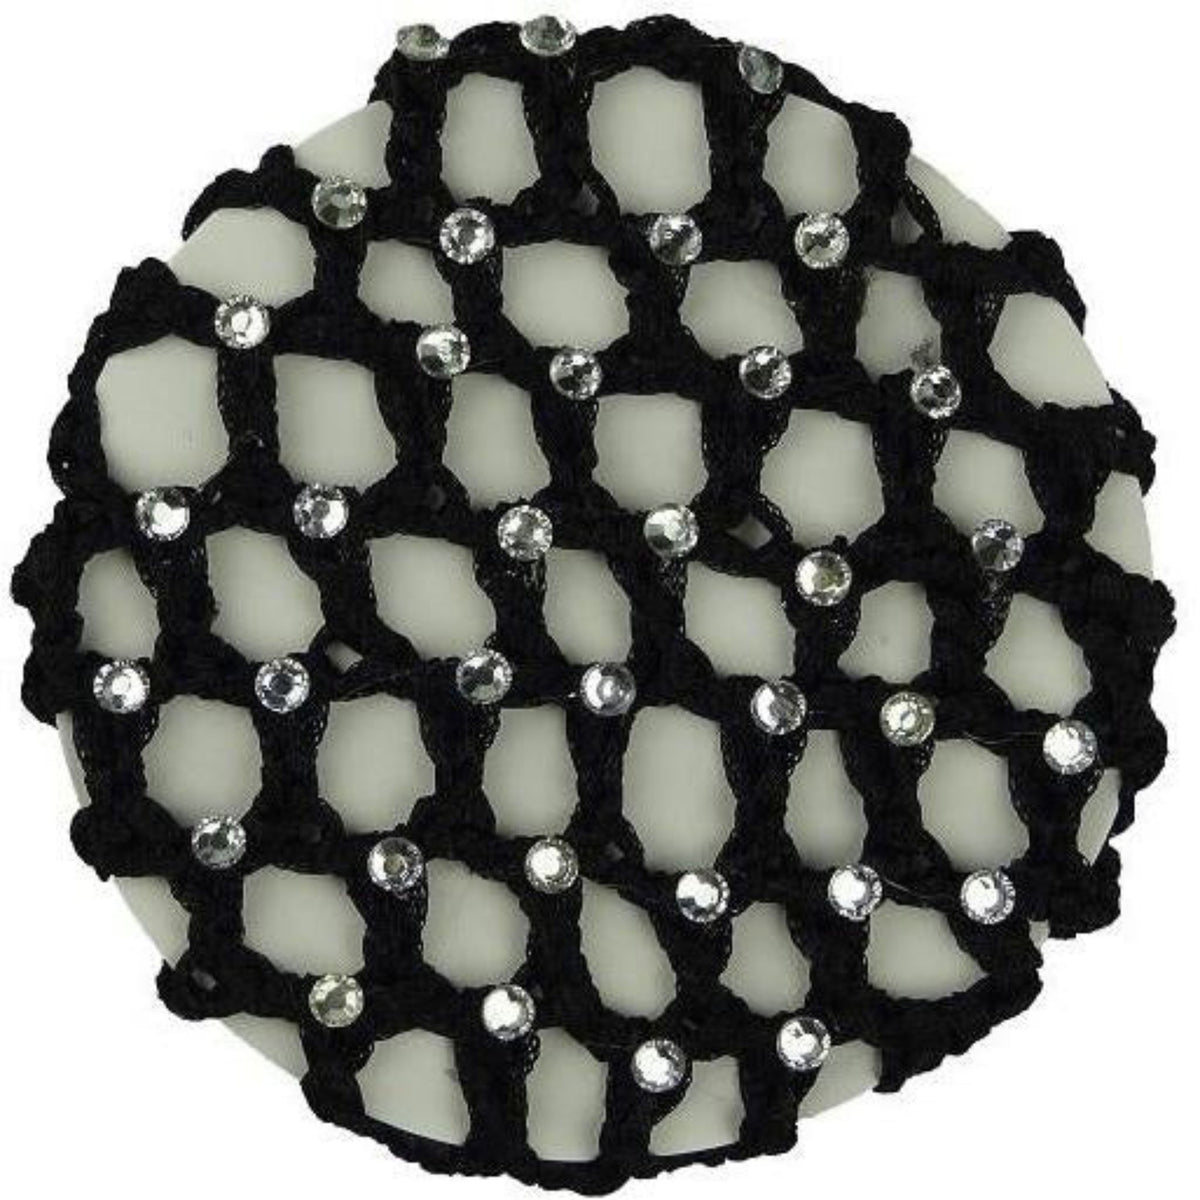 Black Hair net With Numerous Clear Diamantes, On Circular Piece Of Card.